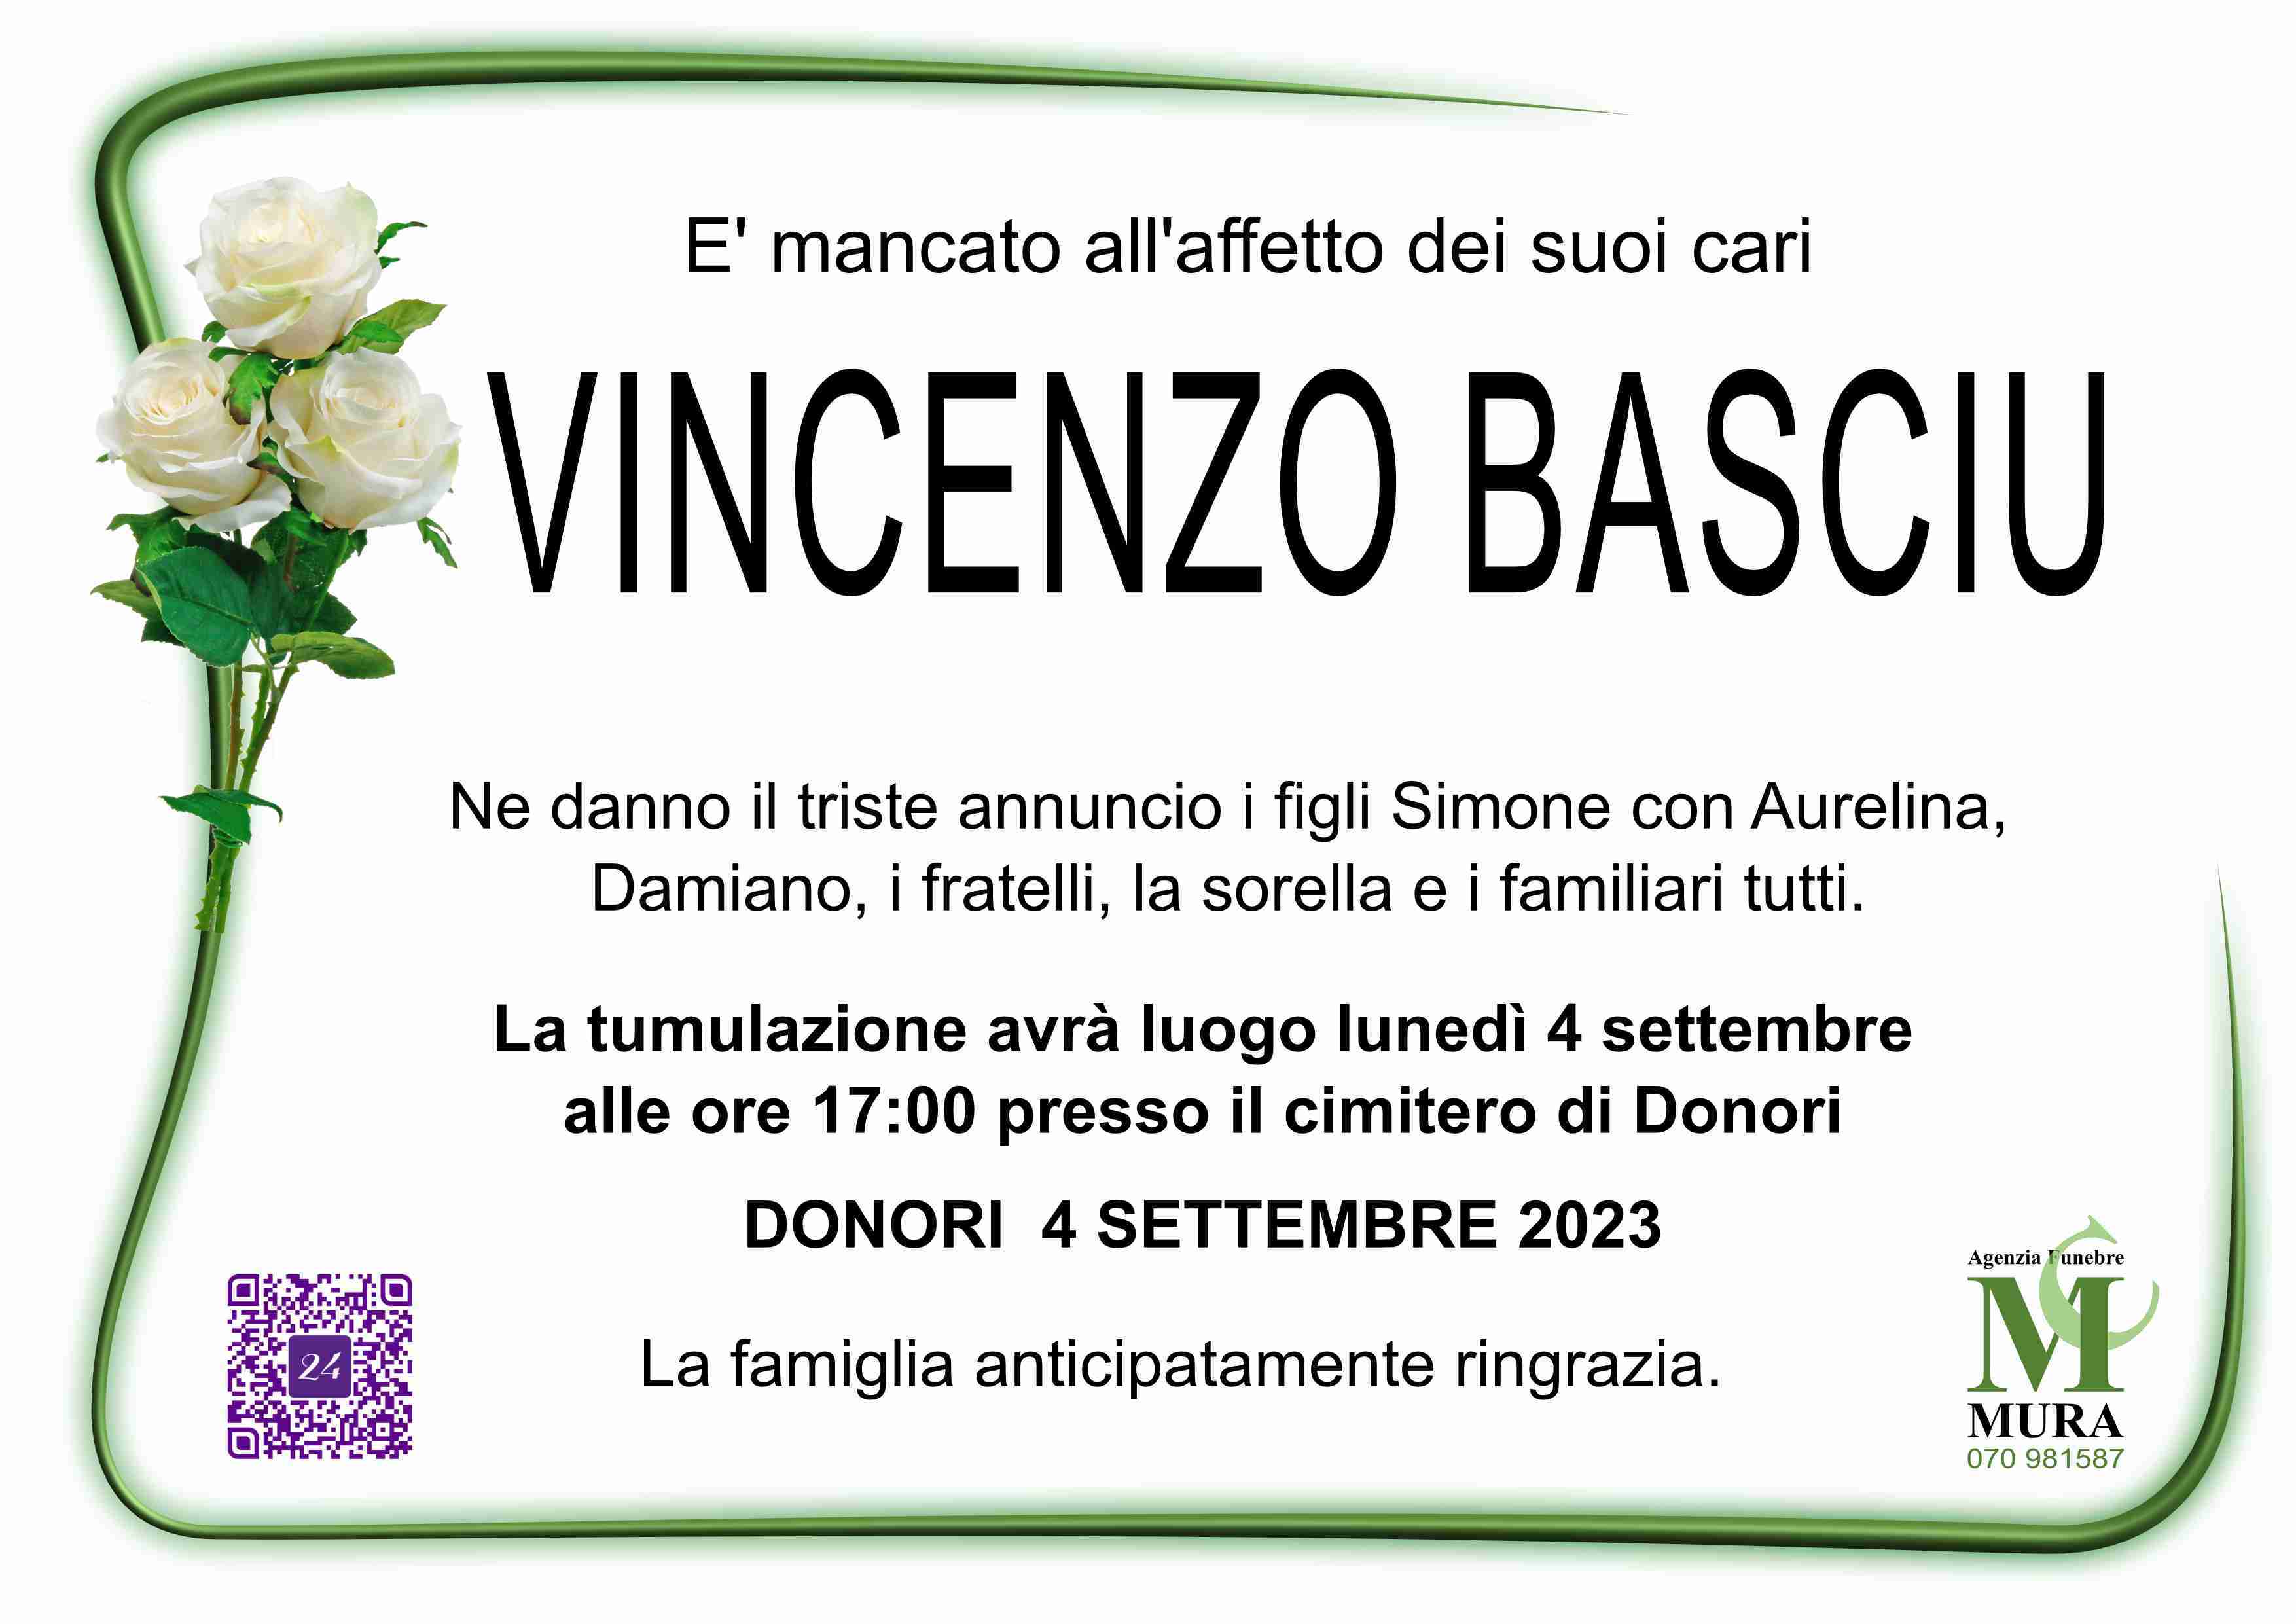 Vincenzo Basciu